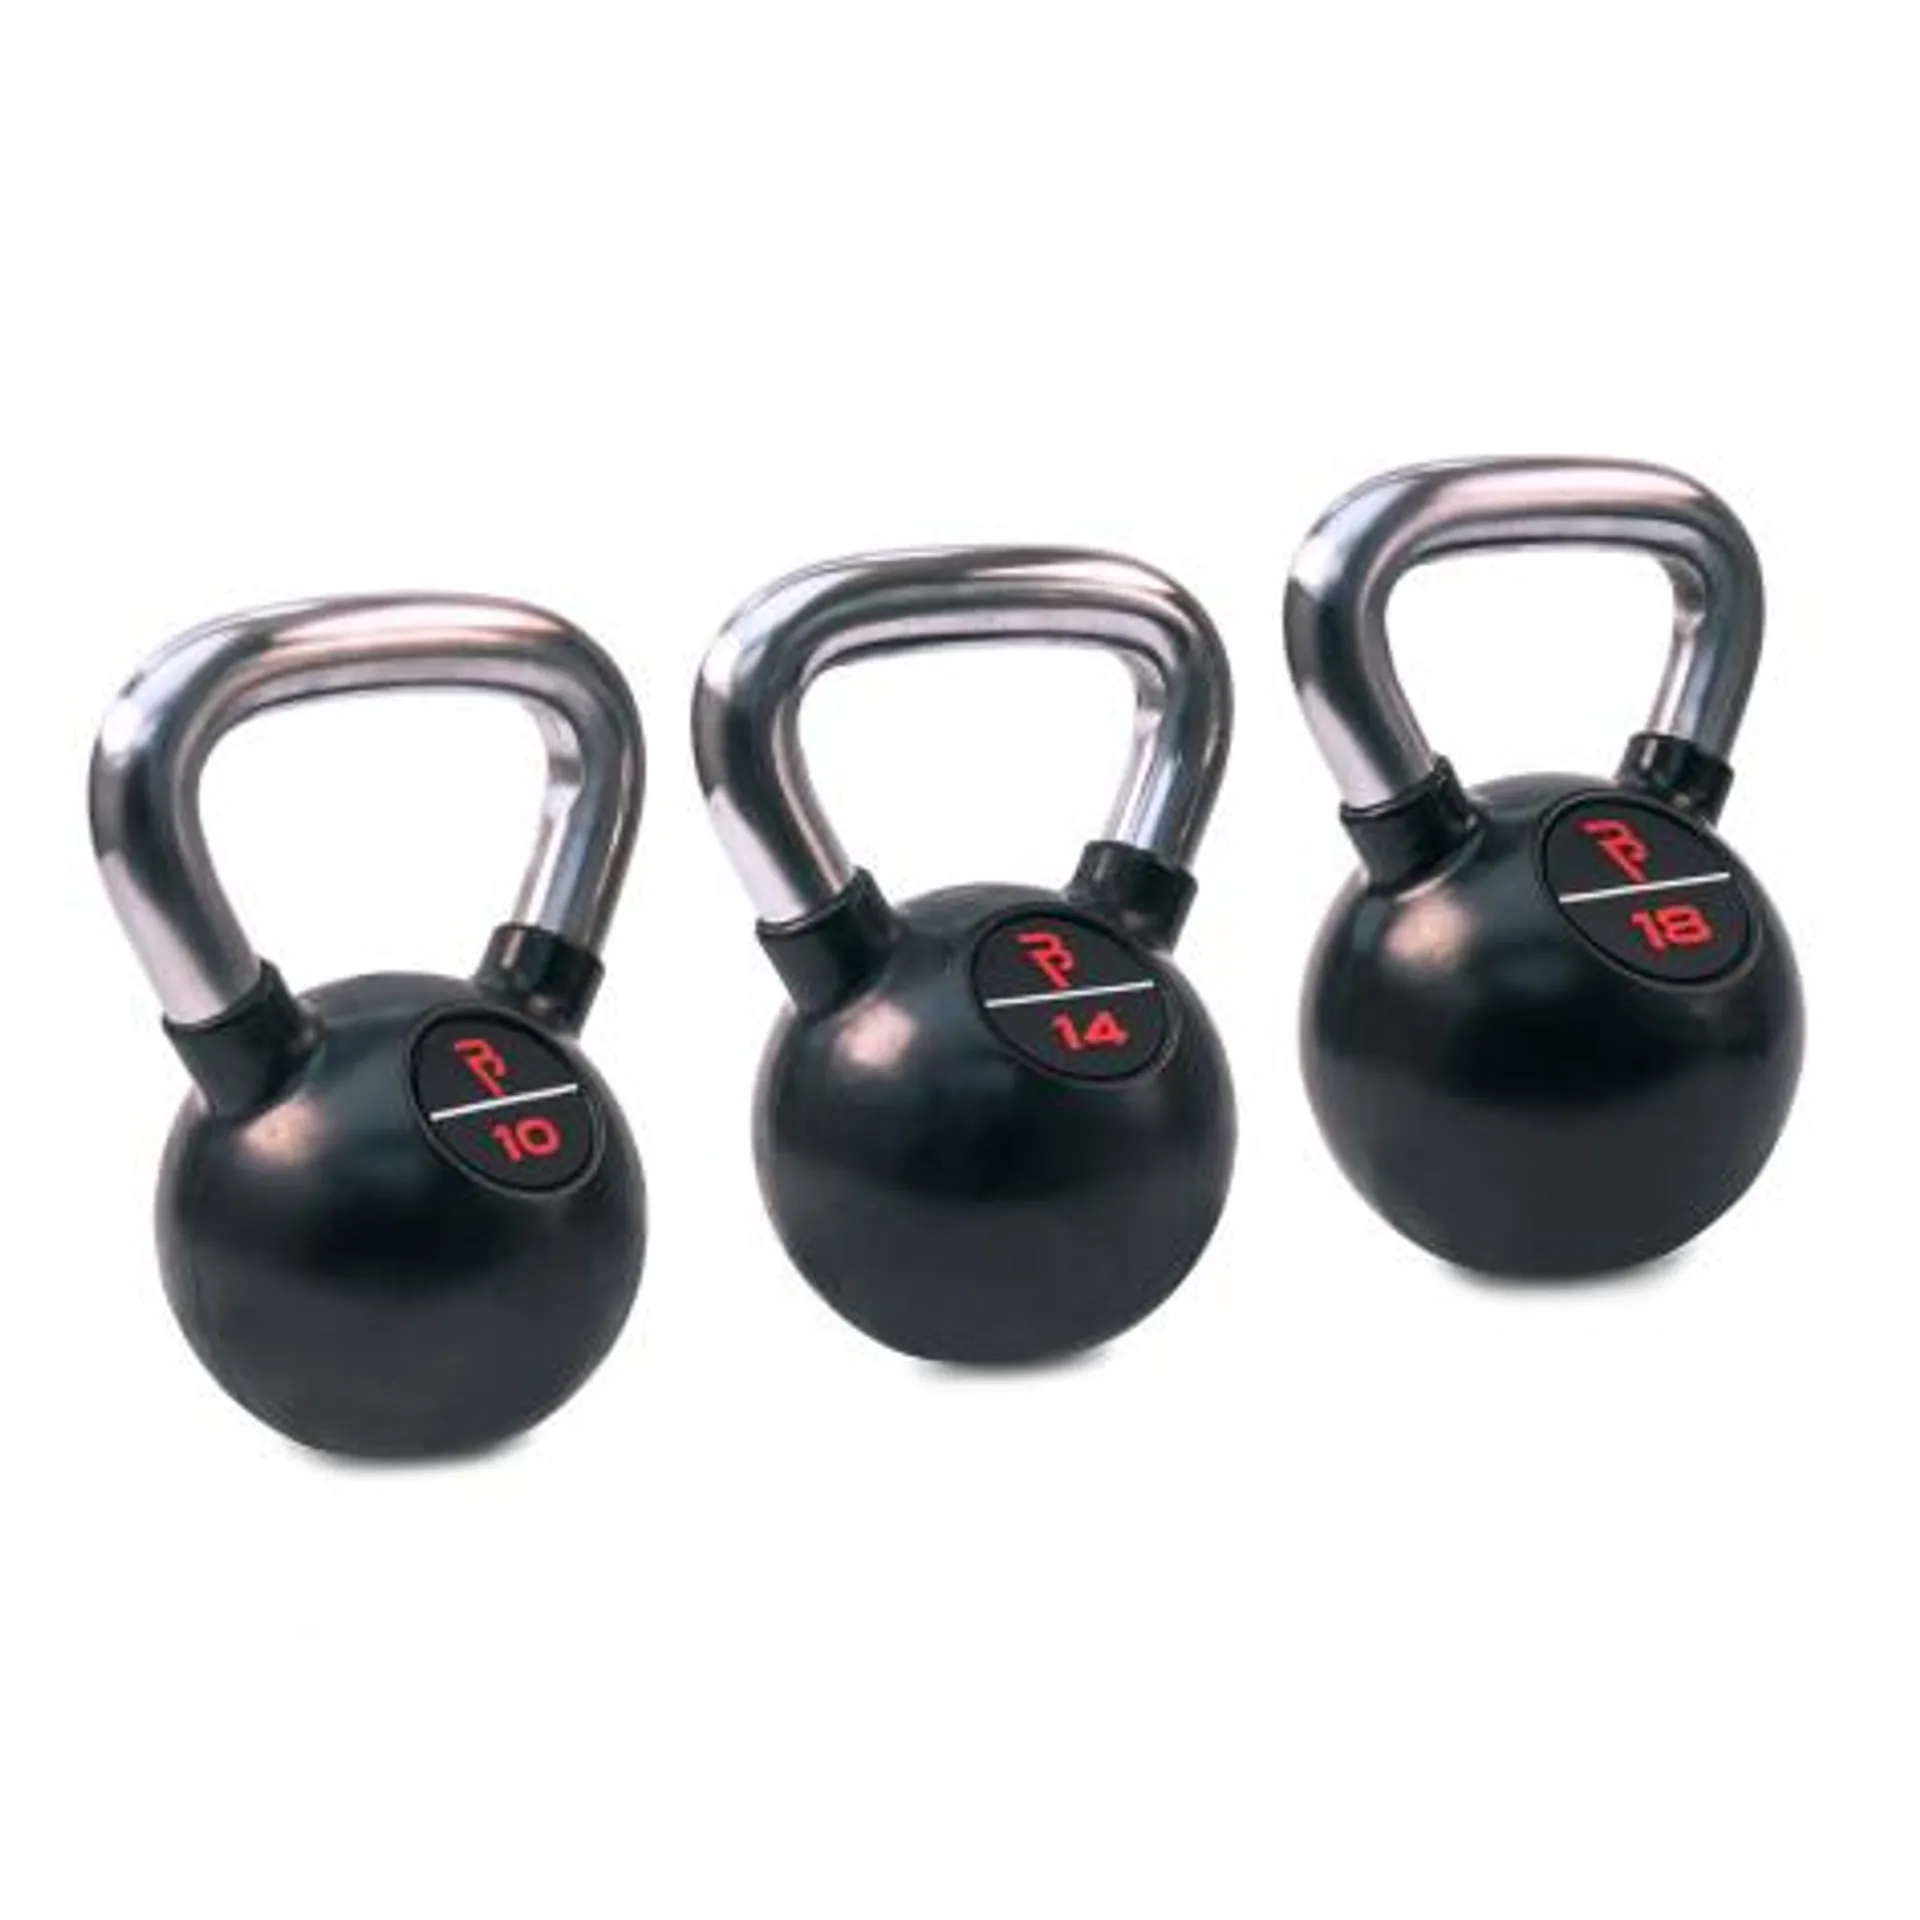 Body Power Premium Black Rubber Coated Kettlebells with Chrome Handle Set (10kg, 14kg, 18kg)